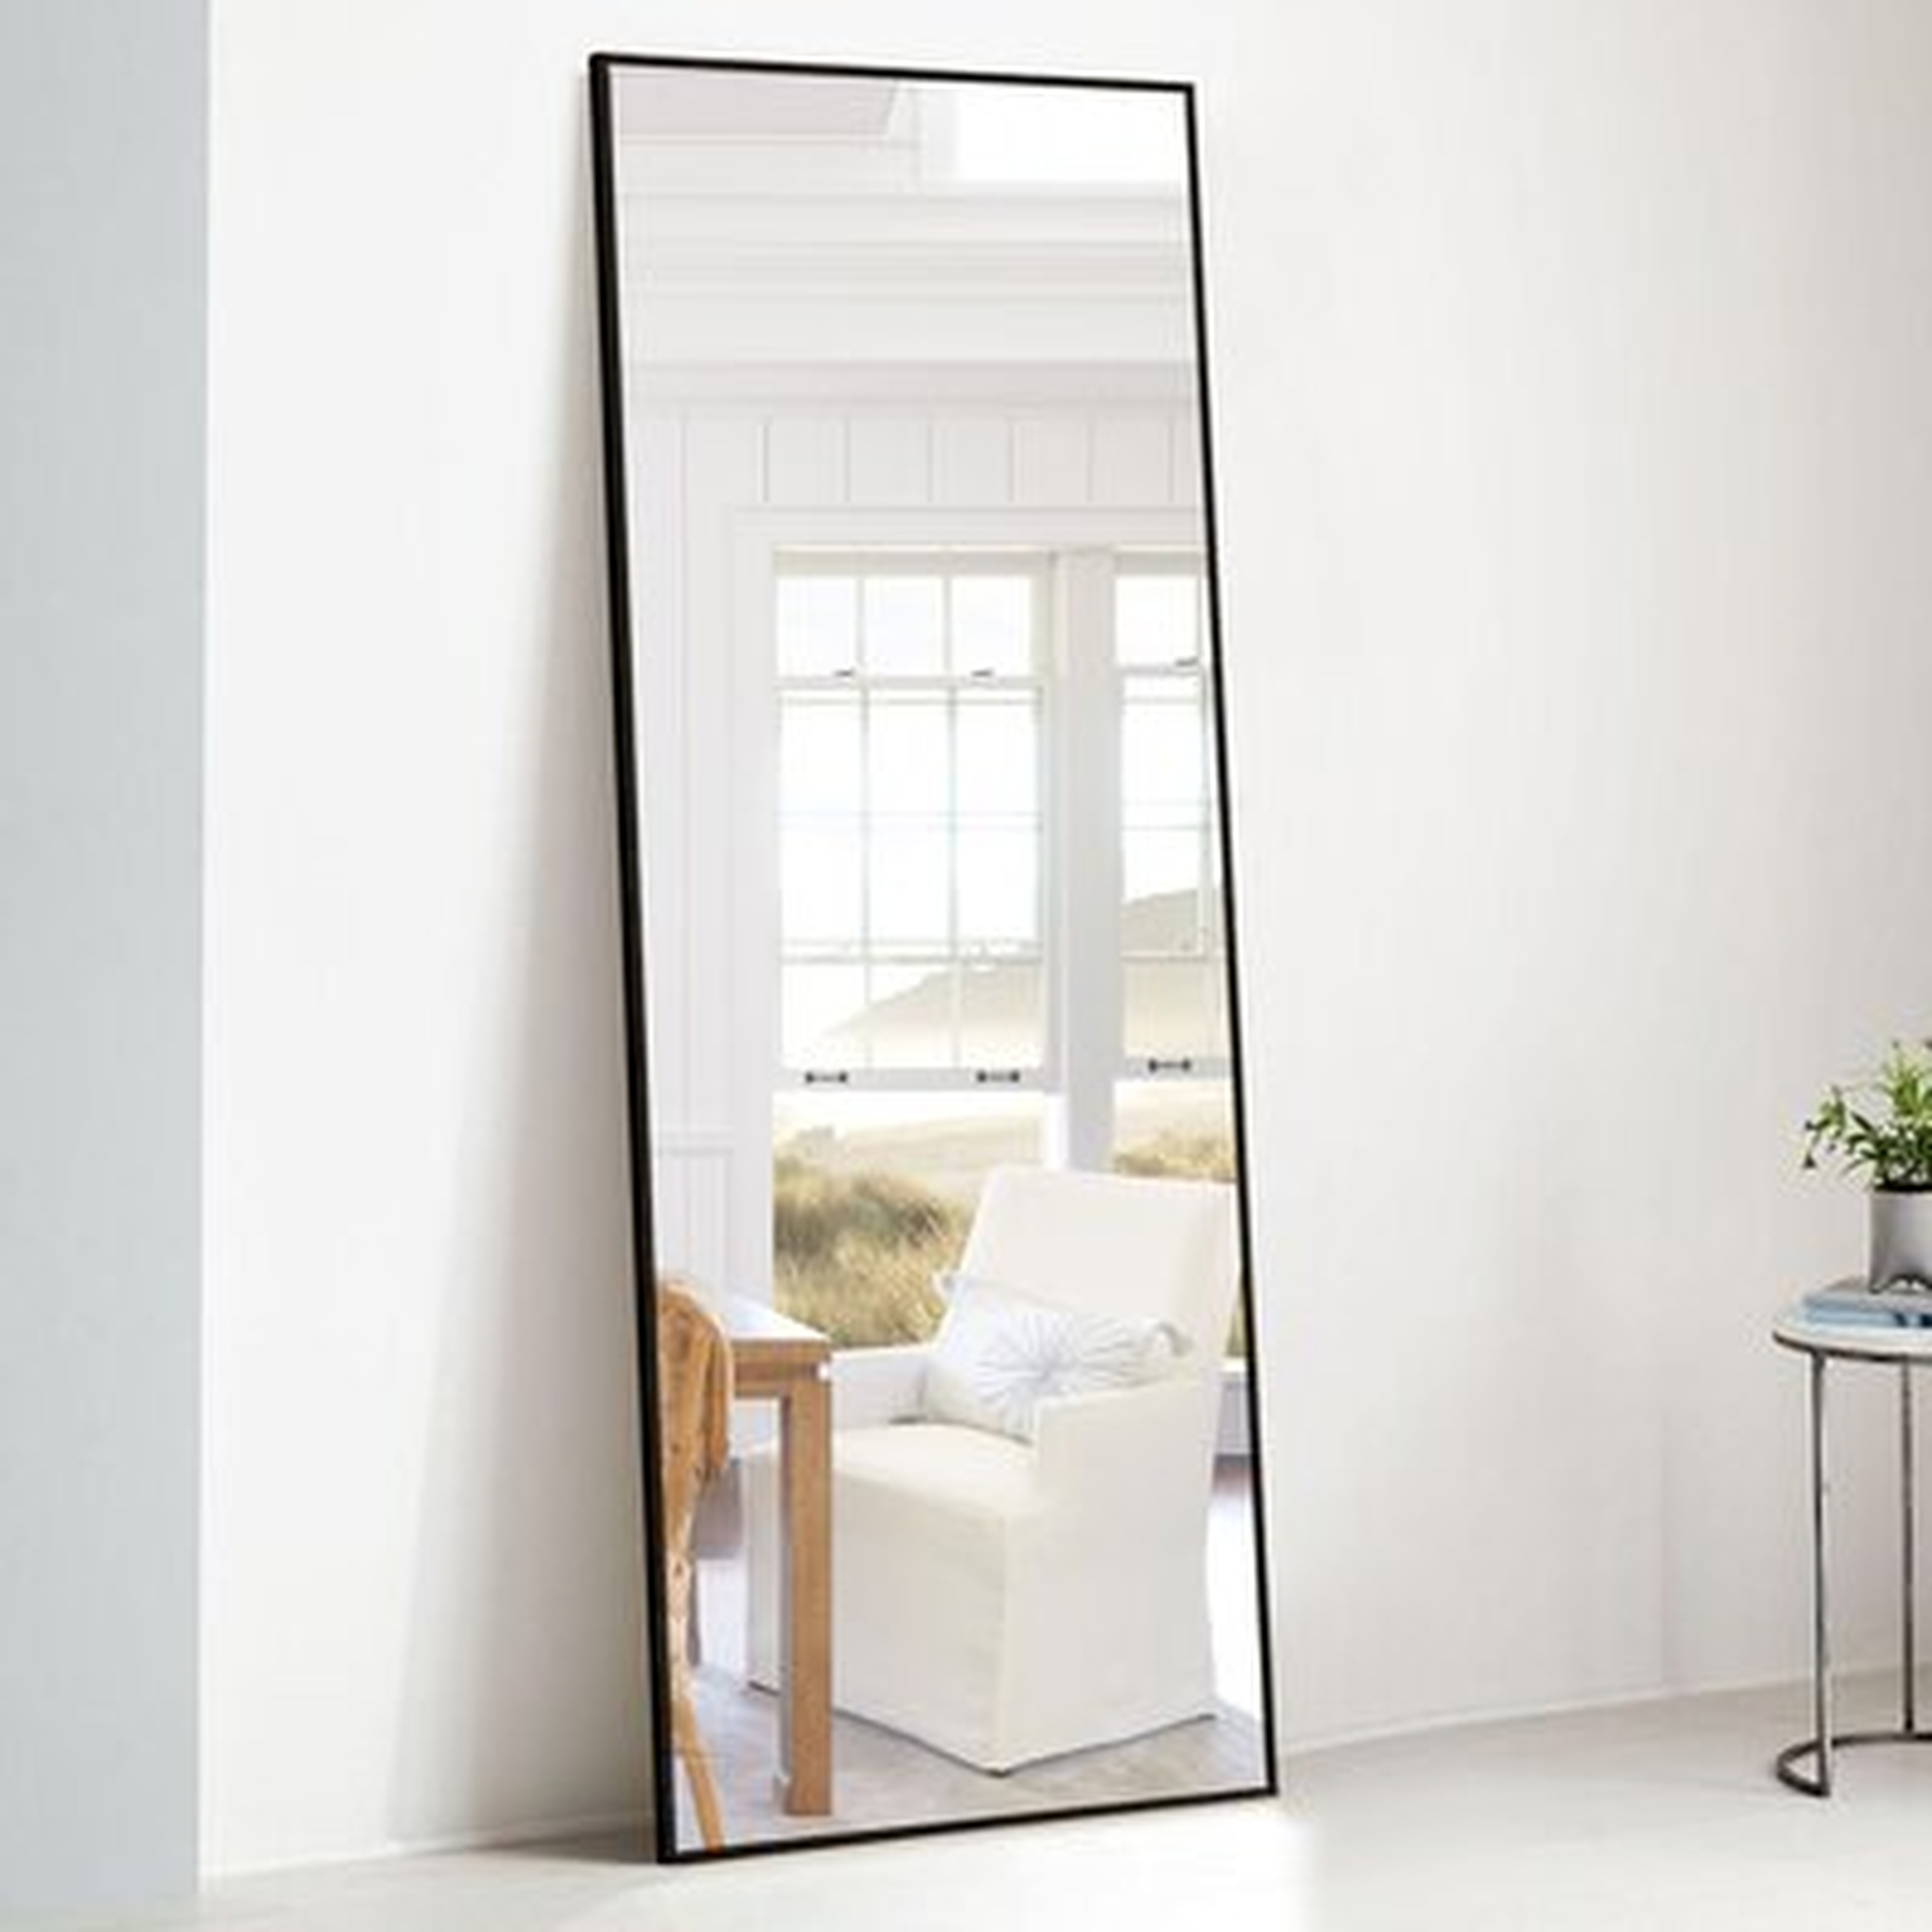 Large Full-Length Floor Mirror Or Wall Mounted Mirror - Wayfair